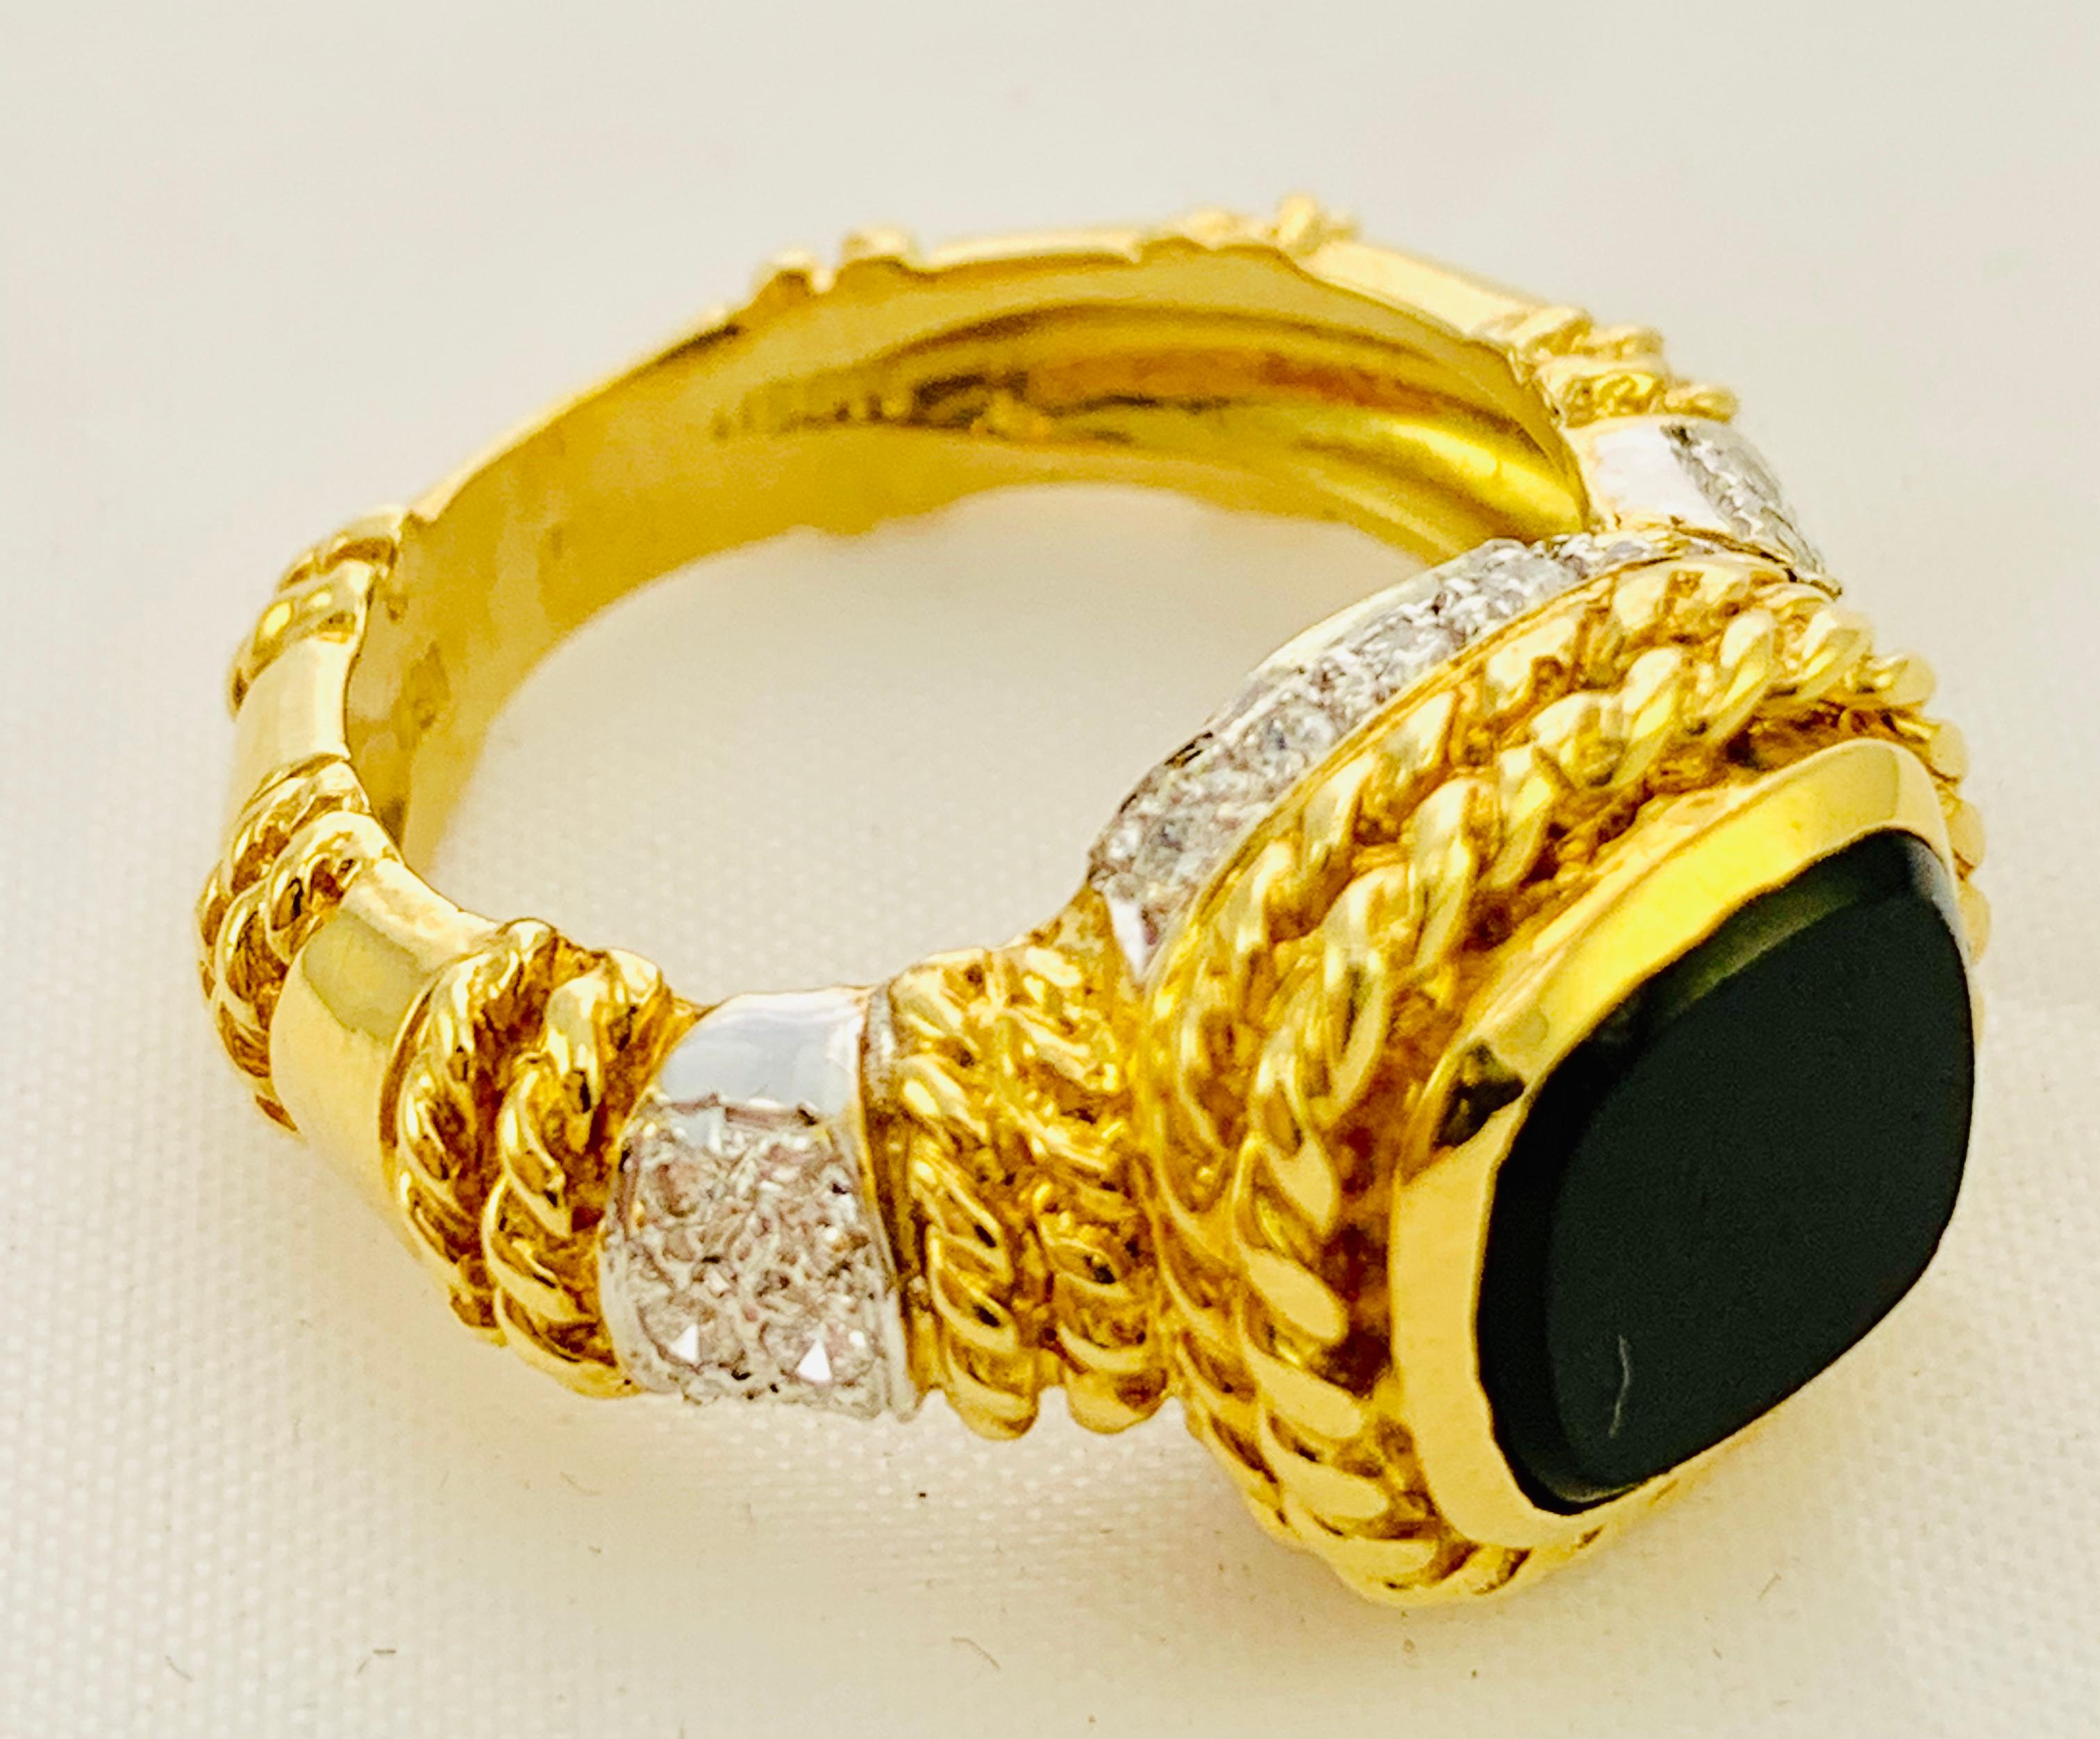 Designer Cassis 18K yellow Gold, Diamond & Onyx ladies Ring Size 5.75  5